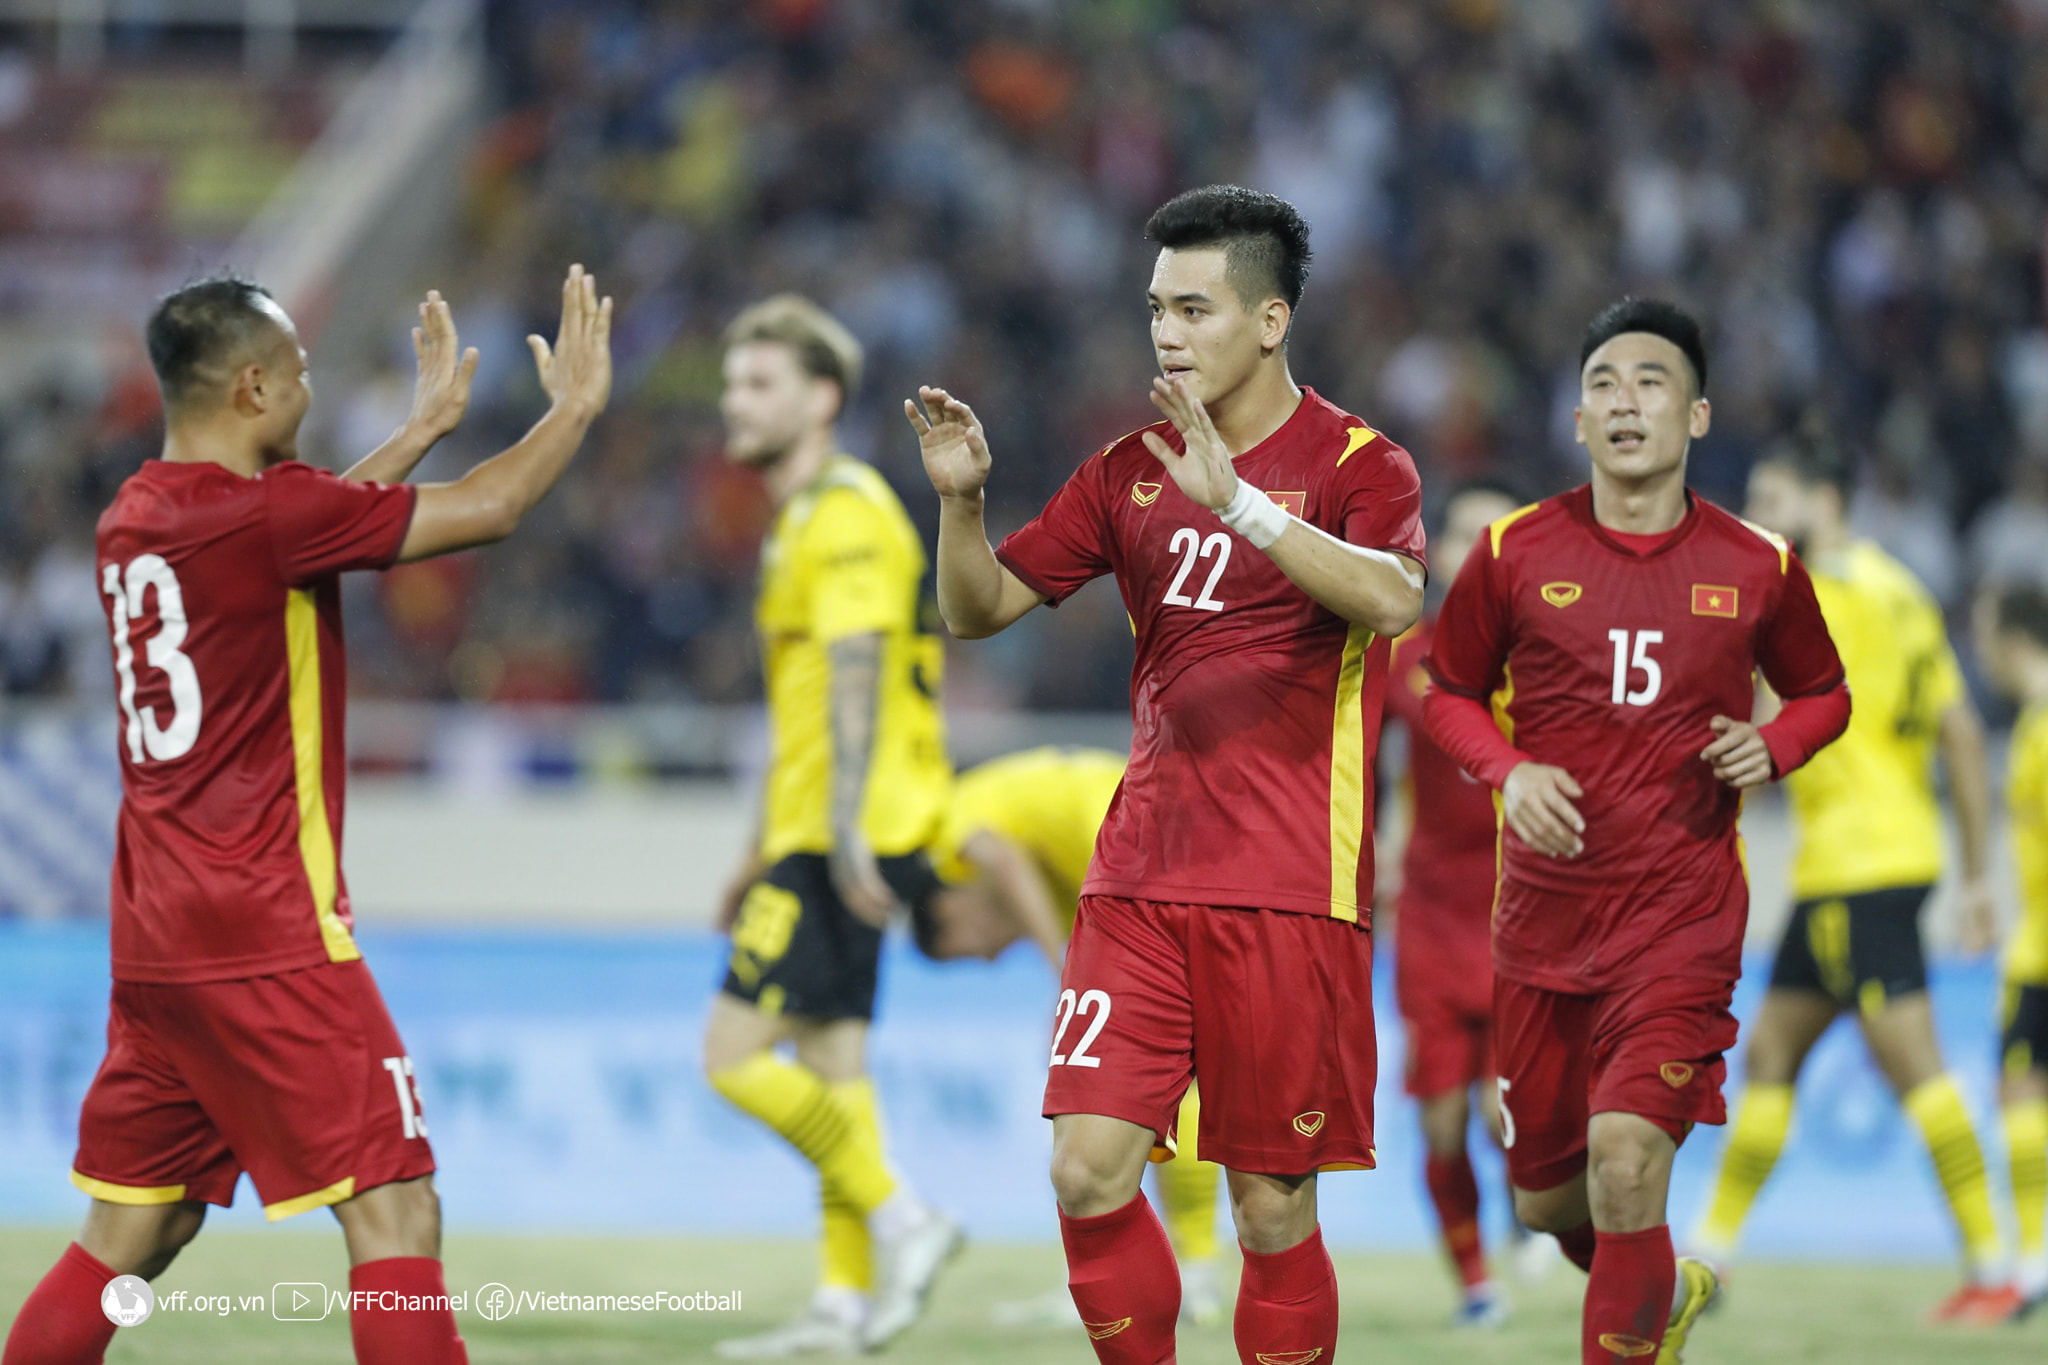 Sinyal buat Para Rival Piala AFF 2022, Timnas Vietnam Berhasil Tekuk Borussia Dortmund